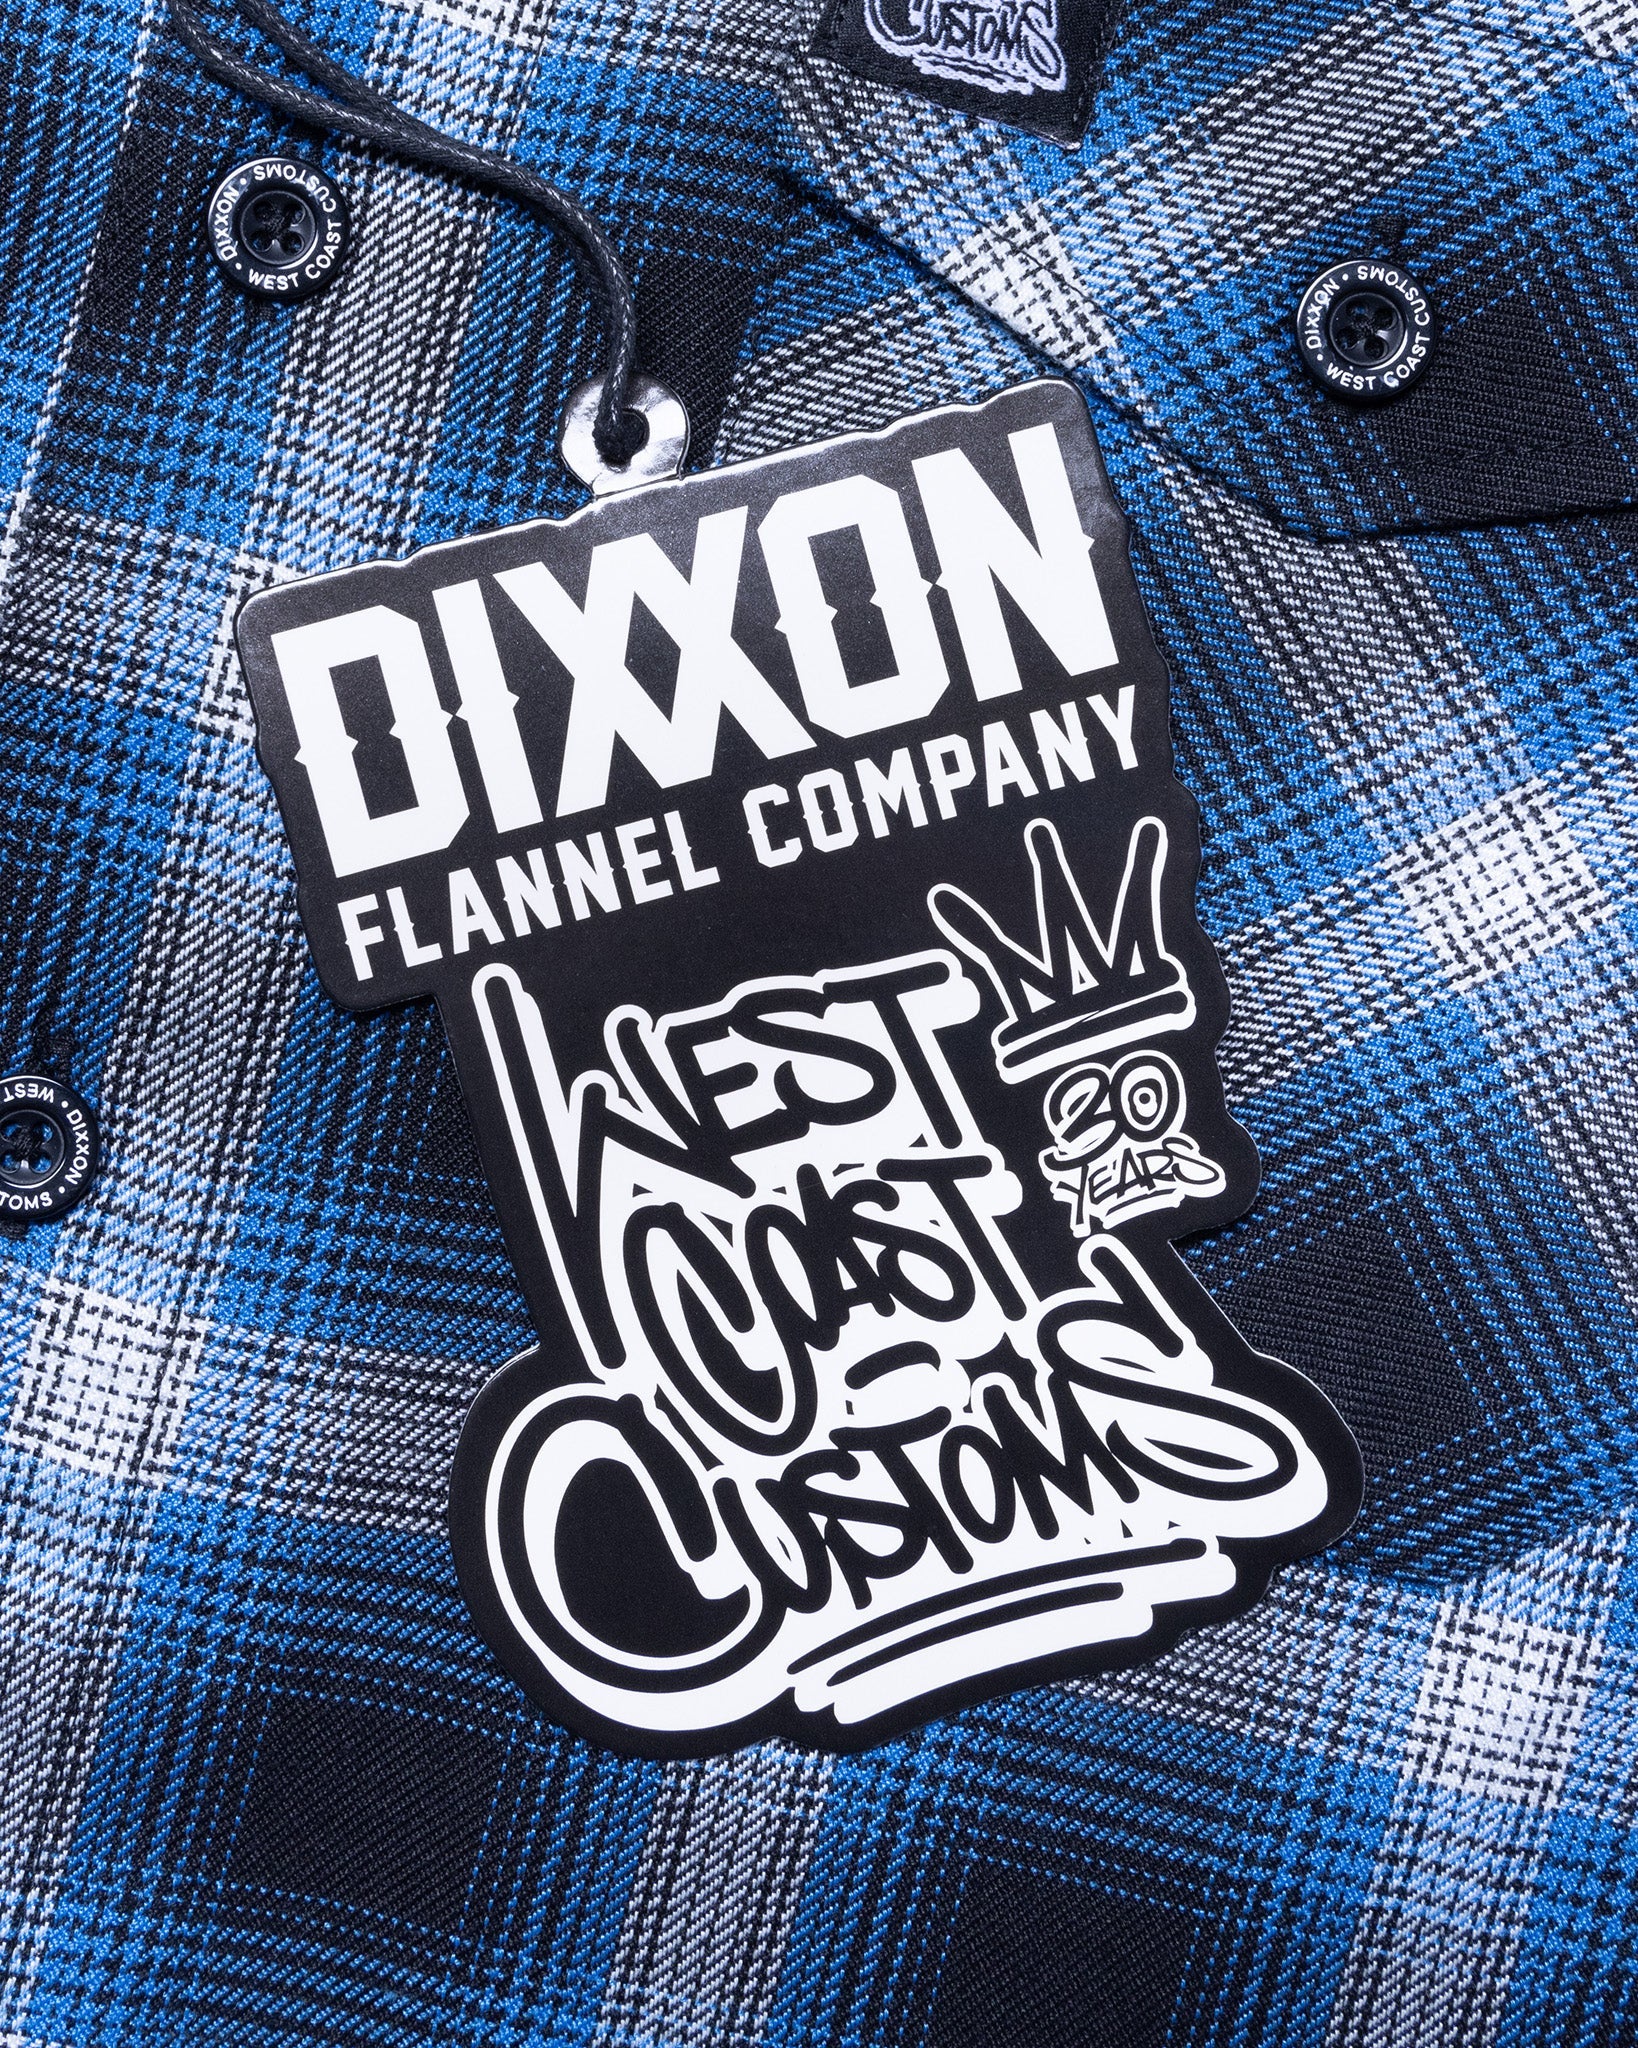 Women's West Coast Customs 30YR Flannel | Dixxon Flannel Co.